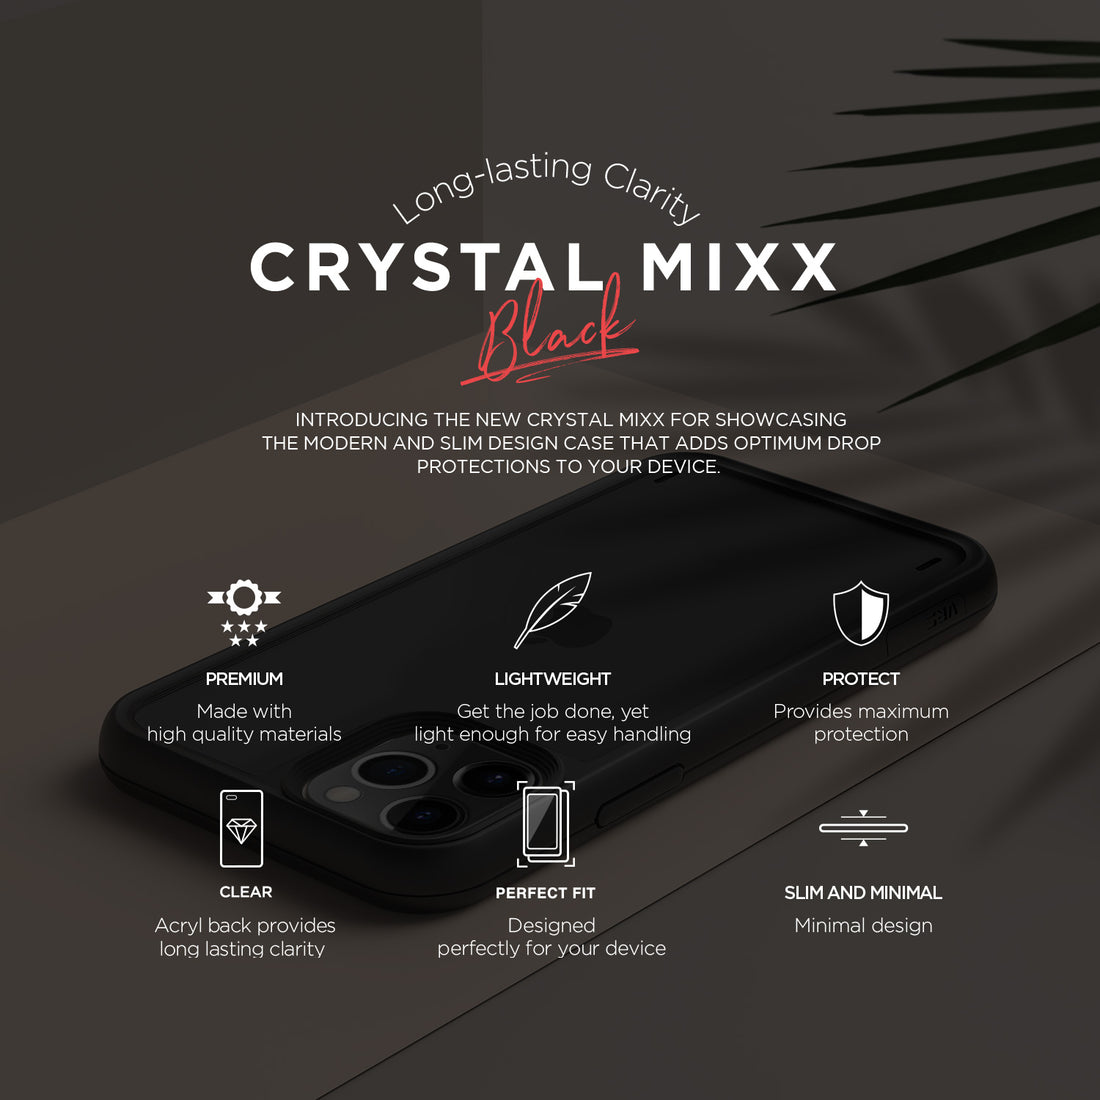 iPhone 11 Pro Case Damda Crystal Mixx Black Anti-yellowing everlasting clear back adds sleek and minimalist design.